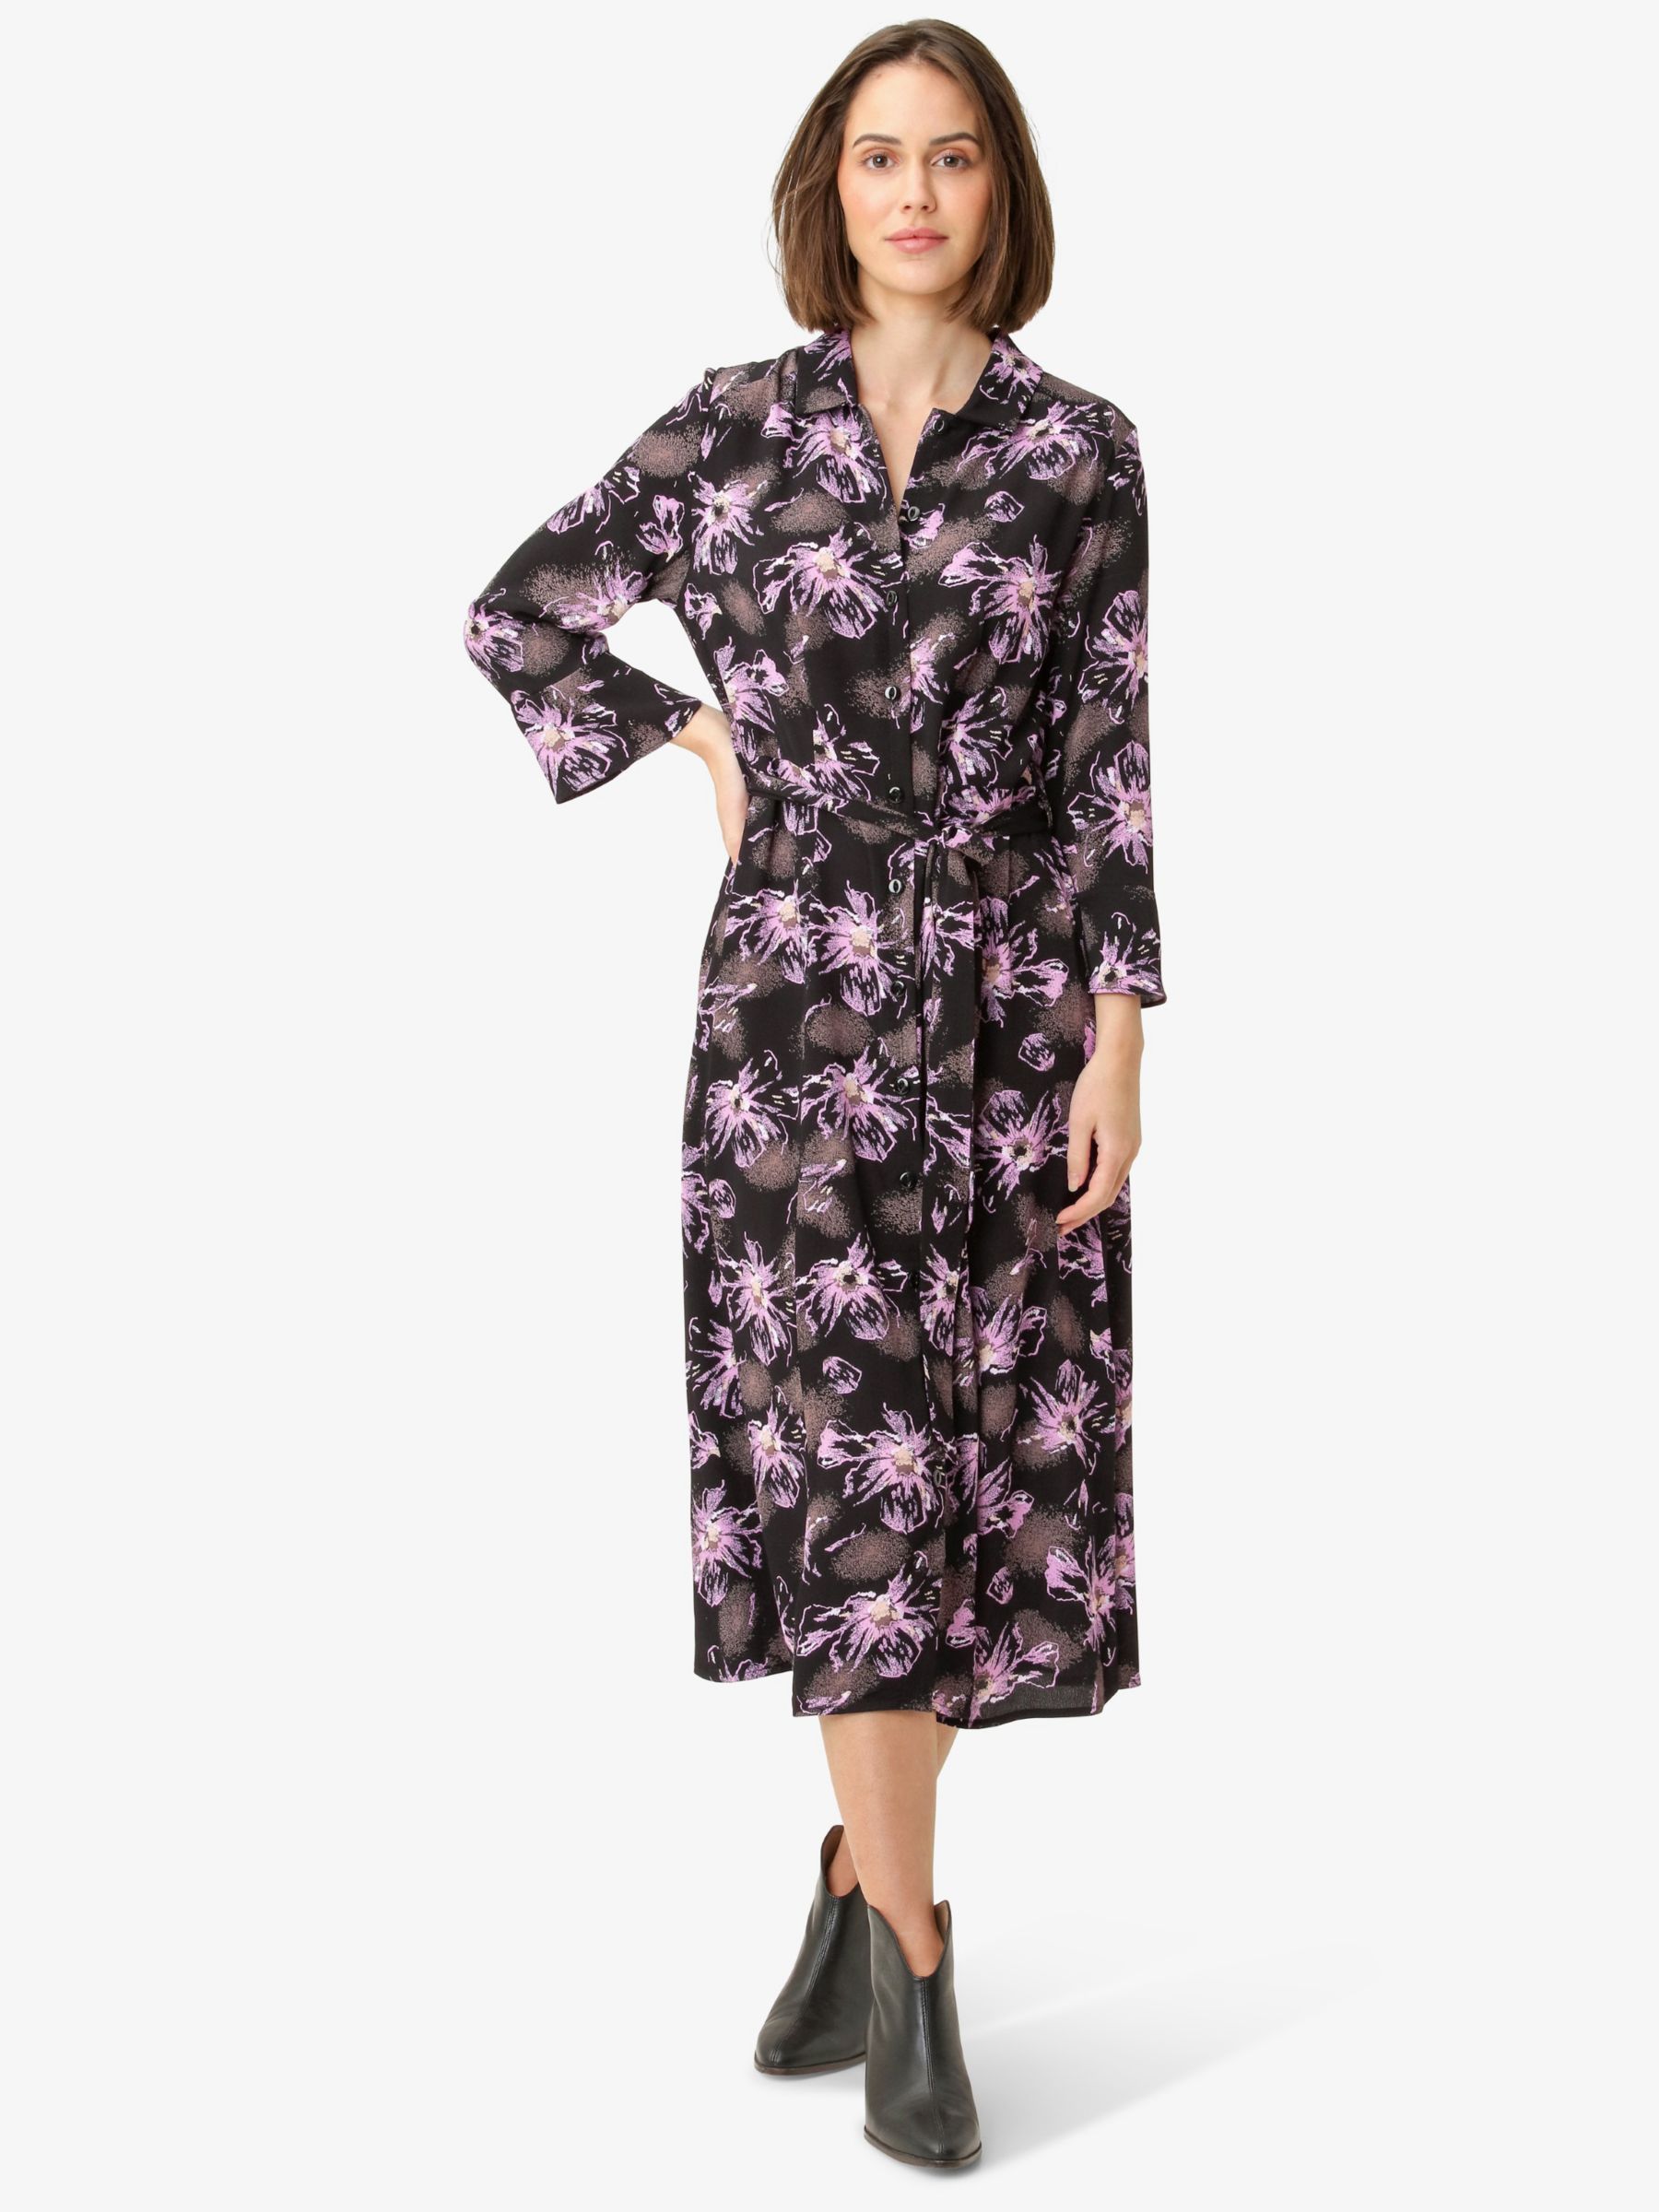 Noa Noa Liva Floral Midi Shirt Dress, Black/Purple, 18